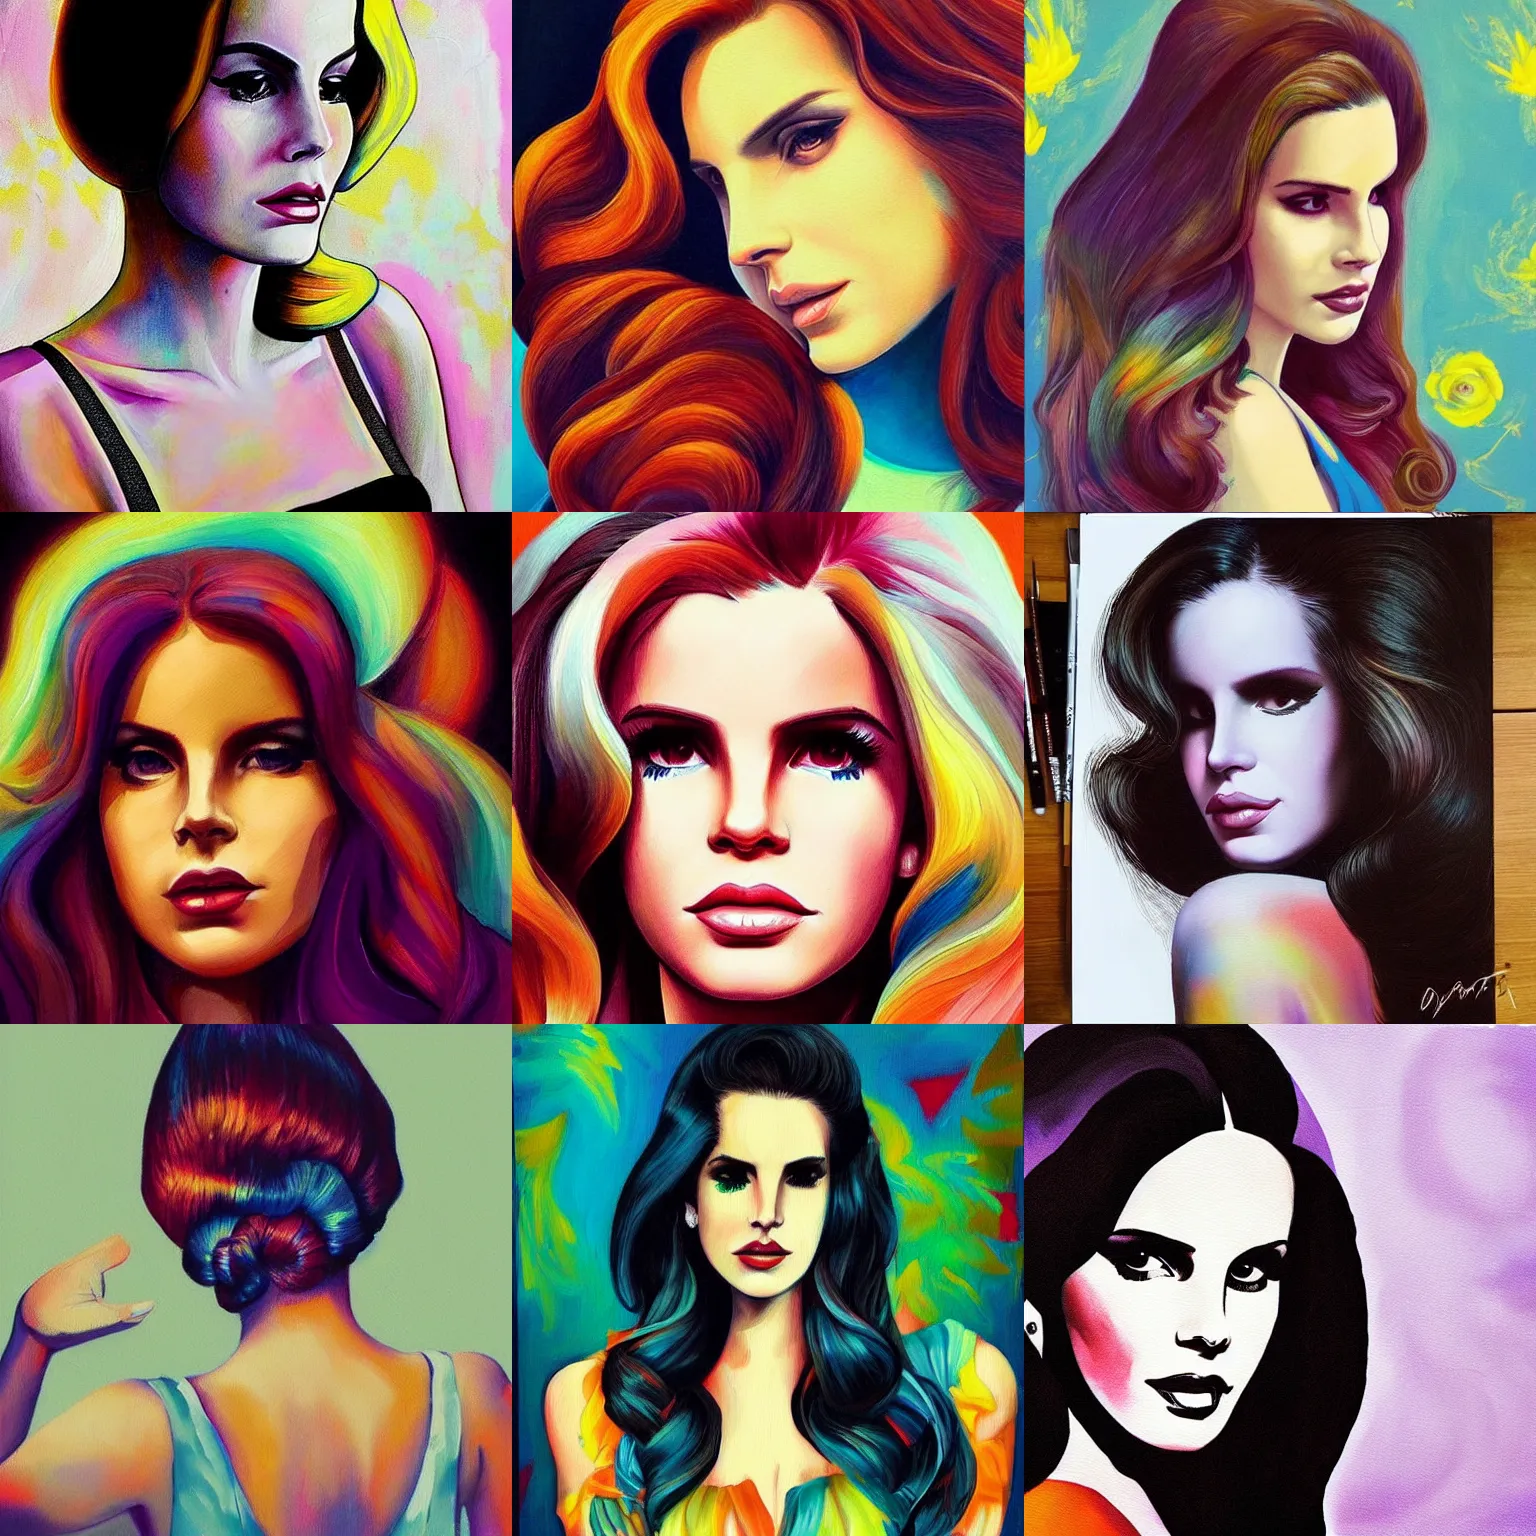 Prompt: Lana del Rey, smooth painting, art, detailed, colorful, smiling, beautiful hair, deep look, intense atmosphere